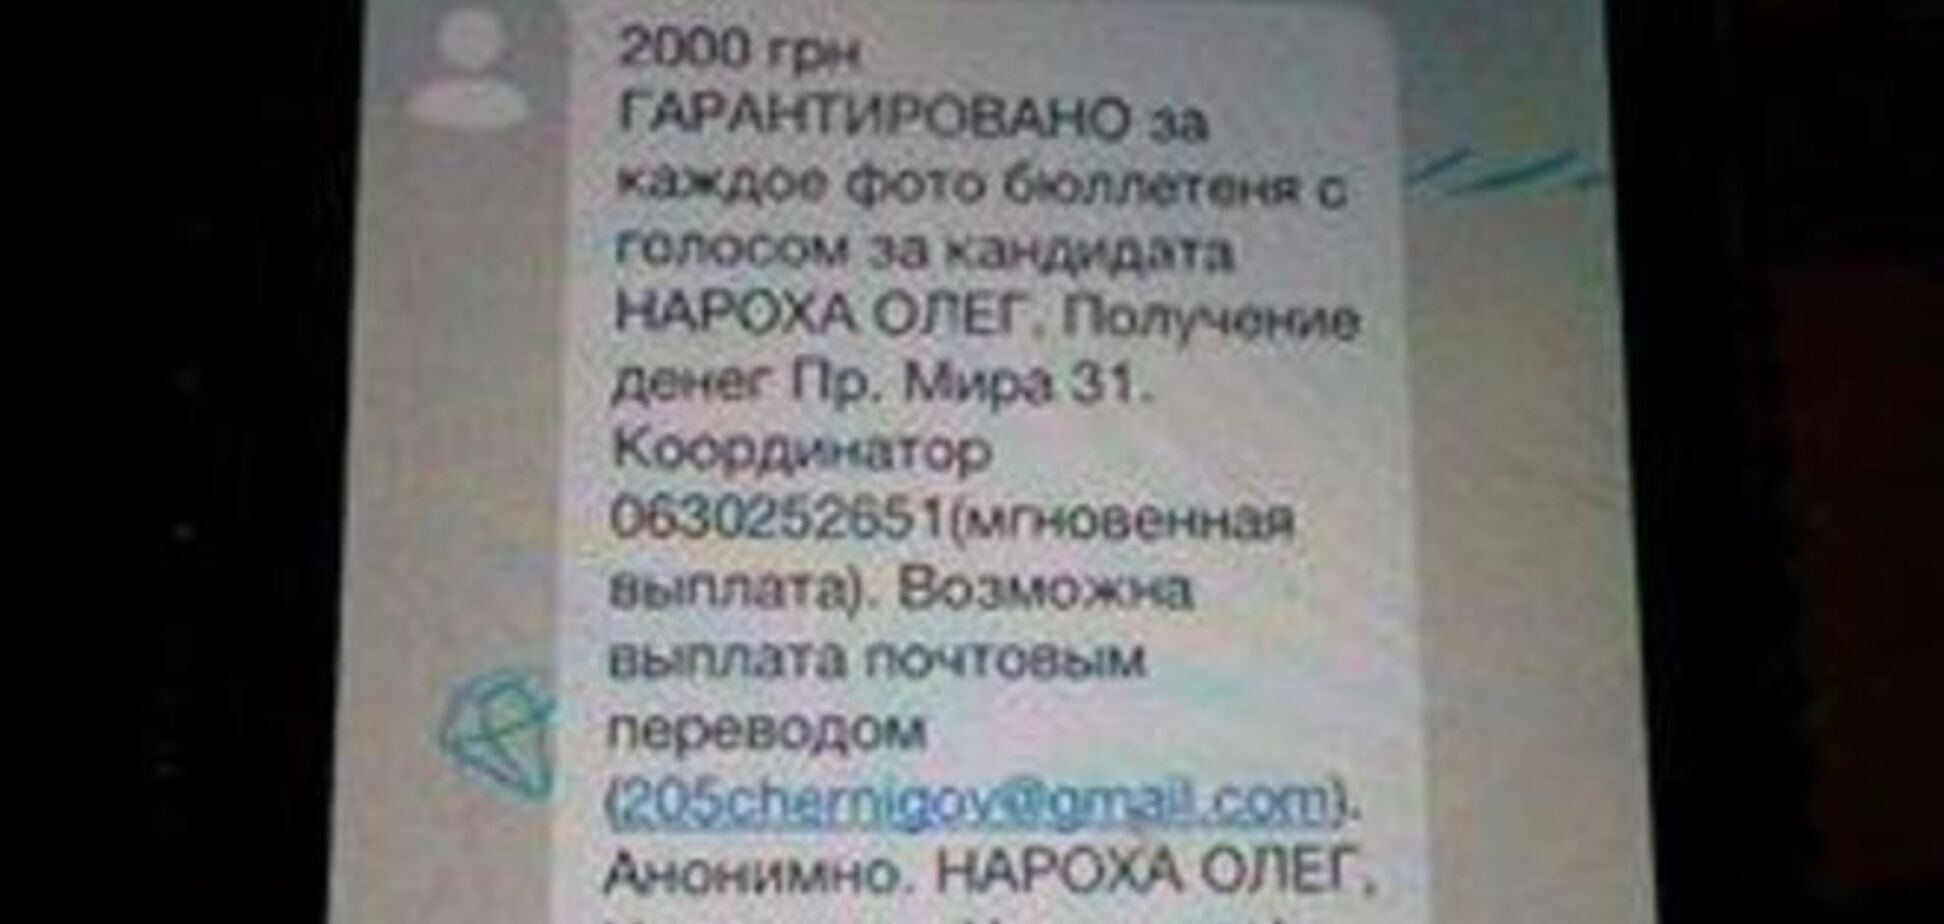 В Чернигове избирателям предлагают продать голос за 2000 грн: фотофакт